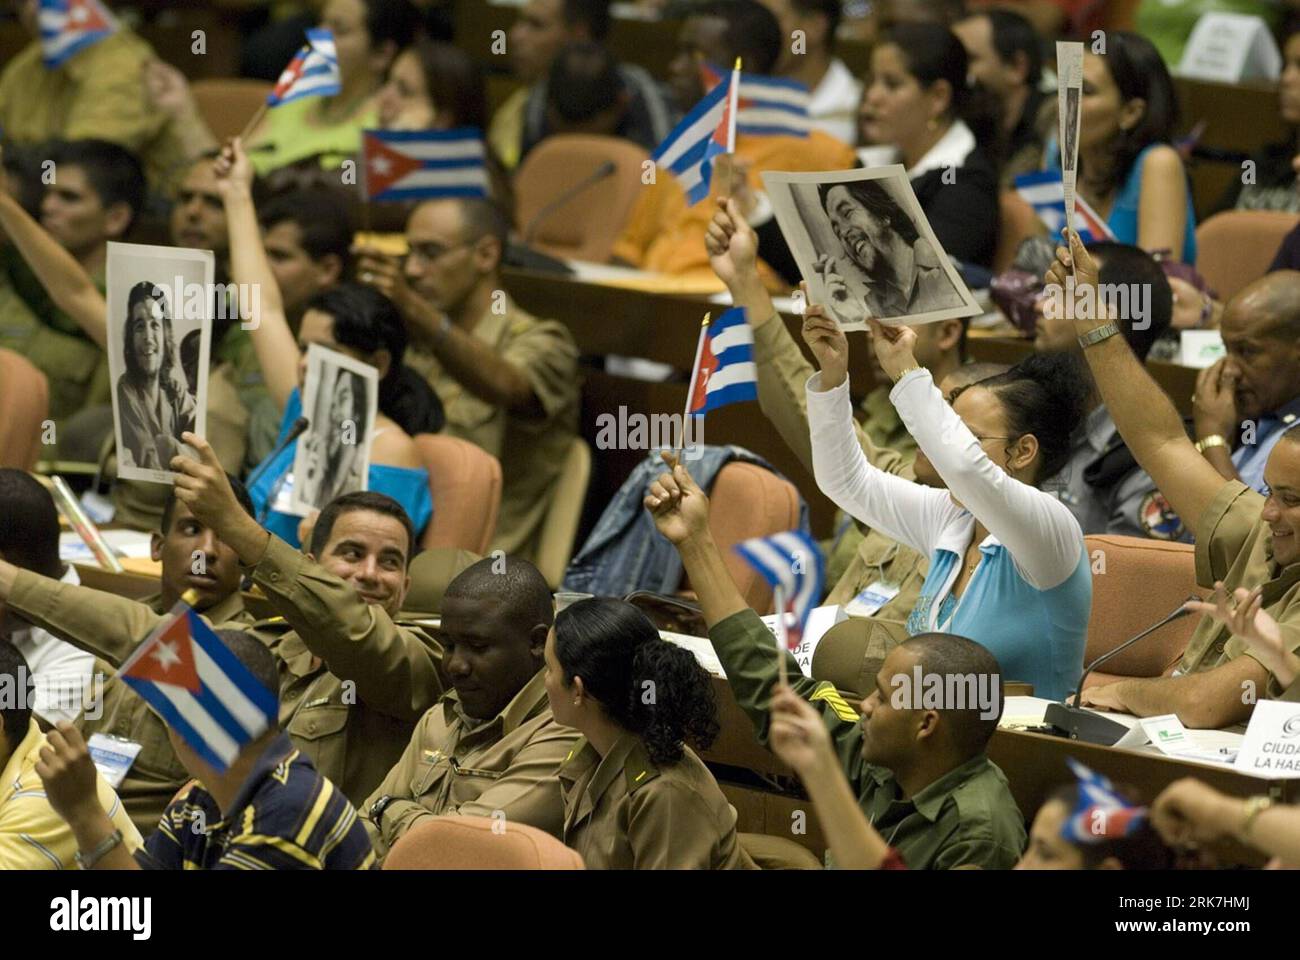 Bildnummer: 53918069  Datum: 04.04.2010  Copyright: imago/Xinhua (100405) -- HAVANA, April 5, 2010 (Xinhua) -- Delegates attend the 9th congress of the Union de Jovenes Comunistas (Young Communists Union) of Cuba in Havana, capital of Cuba, April 4, 2010. The meeting concluded here on Sunday. (Xinhua/Joaquin Hernandez) (gj) (5)CUBA-HAVANA-YOUNG COMMUNIST UNION-CONGRESS-CLOSE PUBLICATIONxNOTxINxCHN Politik Kongress Kommunistischer Jugendverband Jugendorganisation der kommunistischen Partei Kubas PCC premiumd xint kbdig xsk 2010 quer o0 Jubel Freude    Bildnummer 53918069 Date 04 04 2010 Copyrig Stock Photo